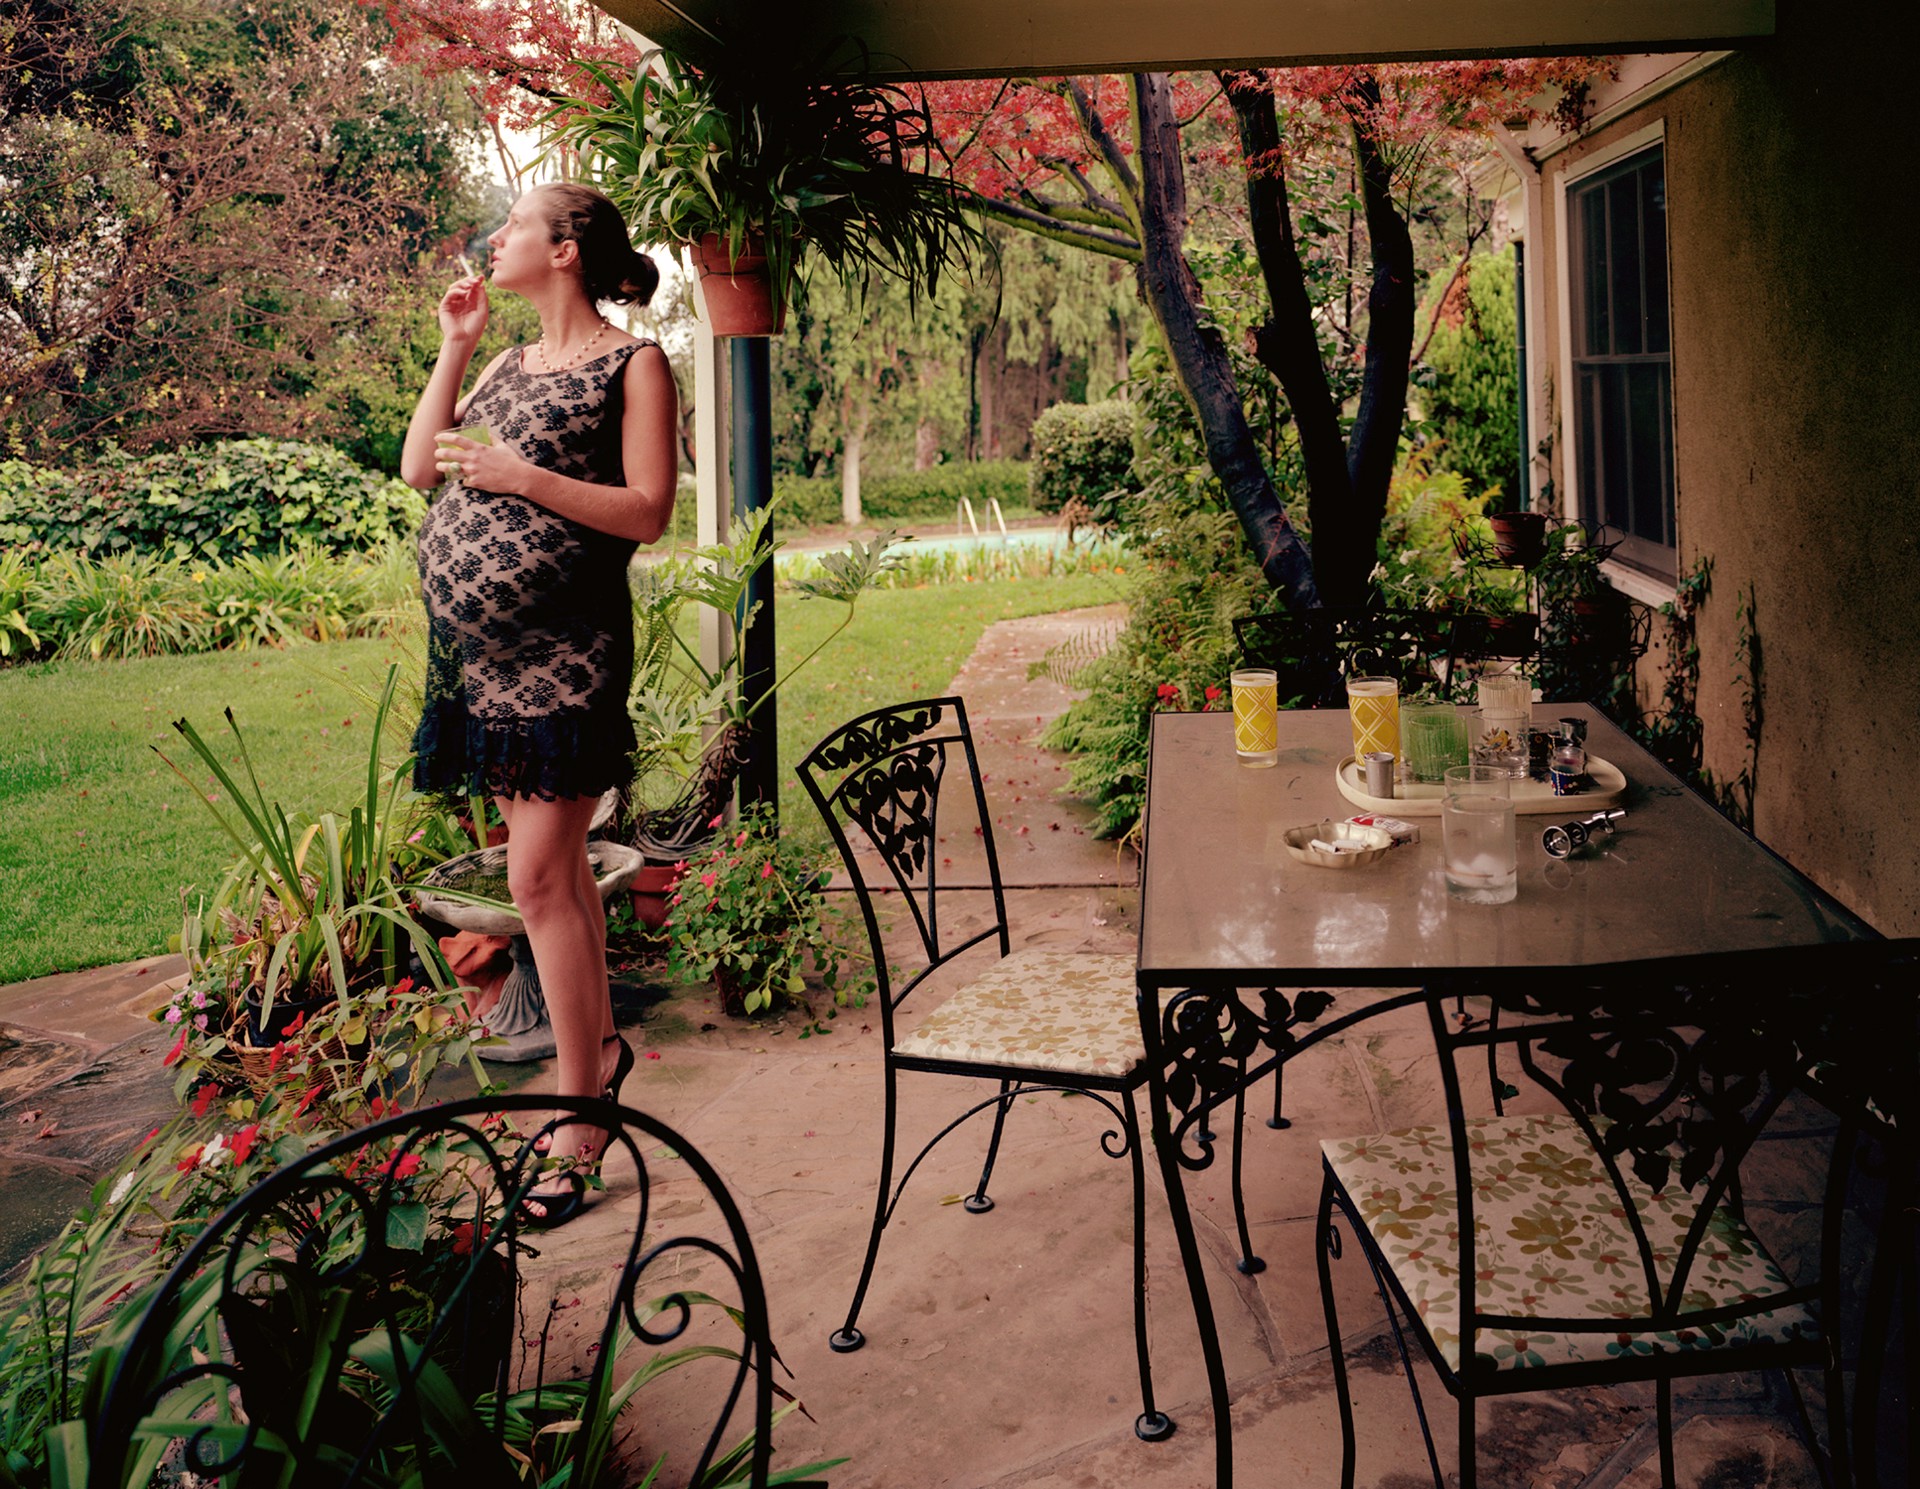 Mom at Mrs. Browns' smoking /Pasadena, California by Danielle Mourning